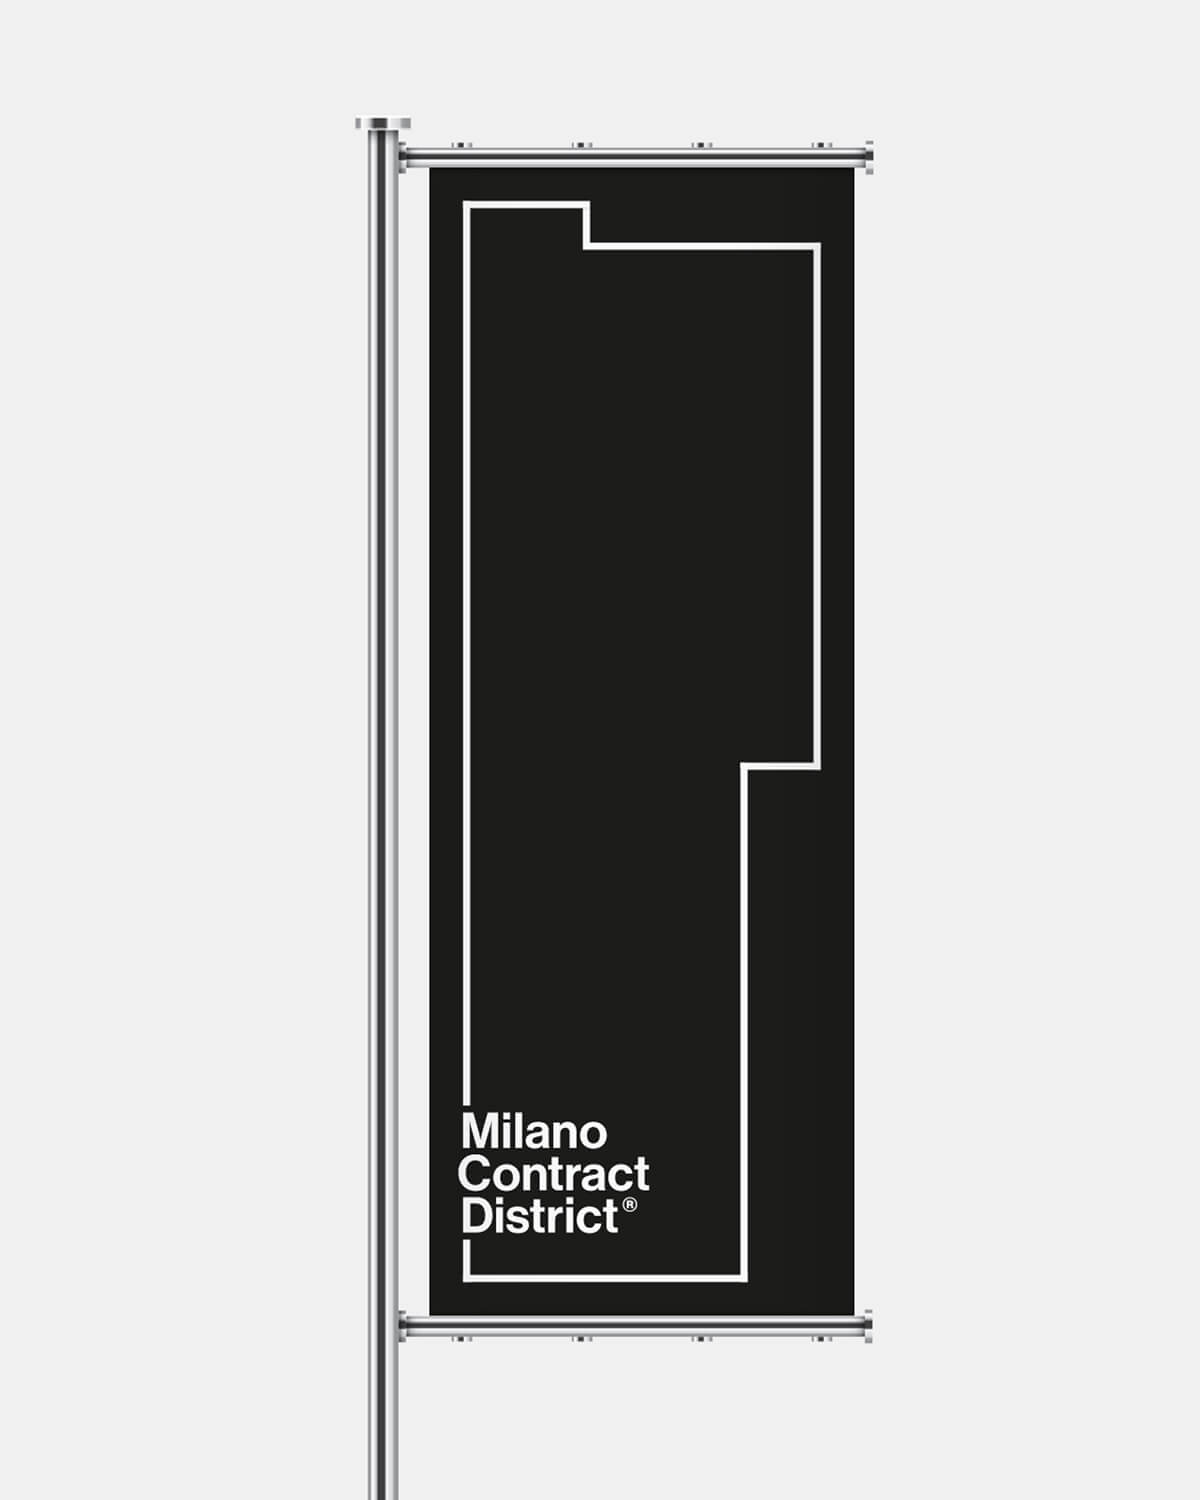 Luca_Fontana_Milano_Contract_District_8